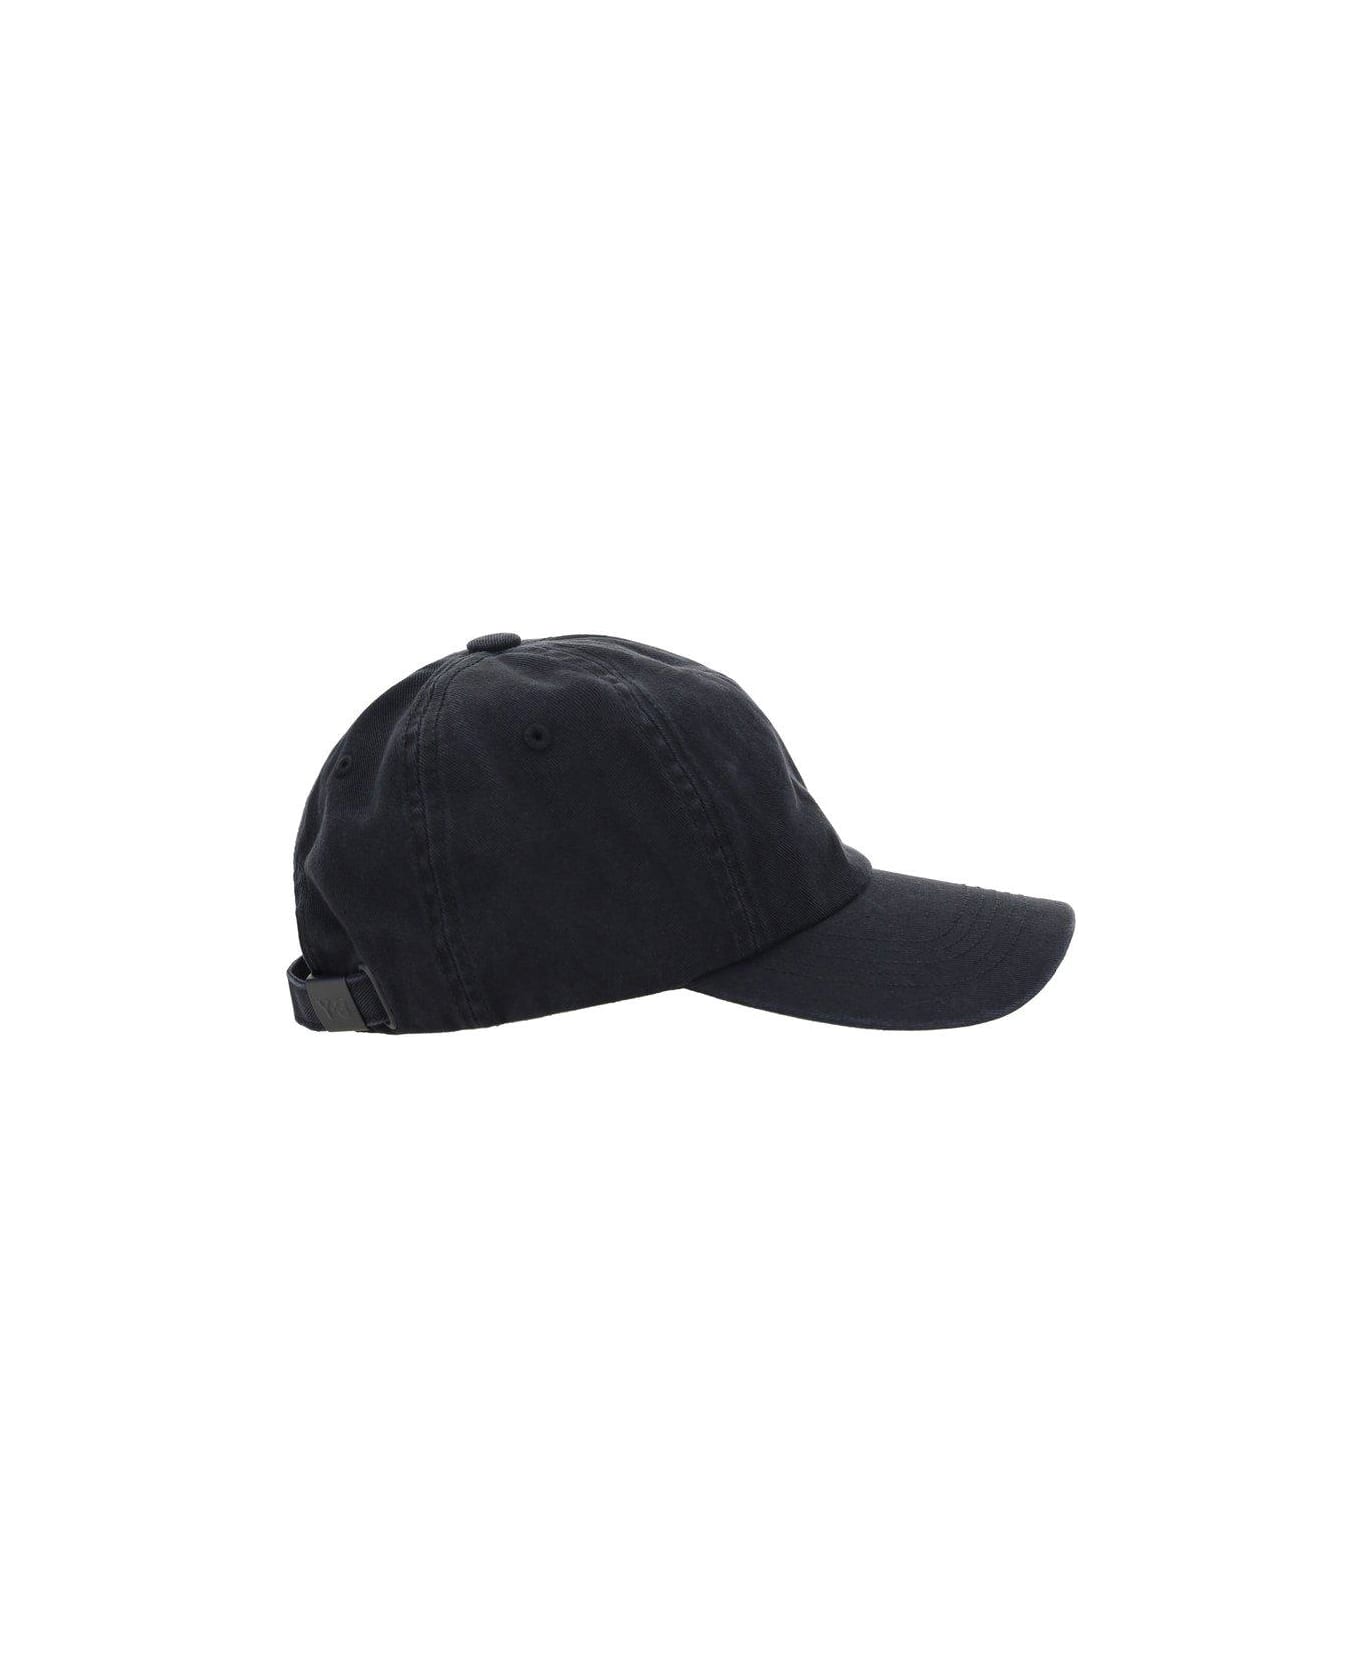 Y-3 Logo Embroidered Baseball Cap Hat - BLACK 帽子